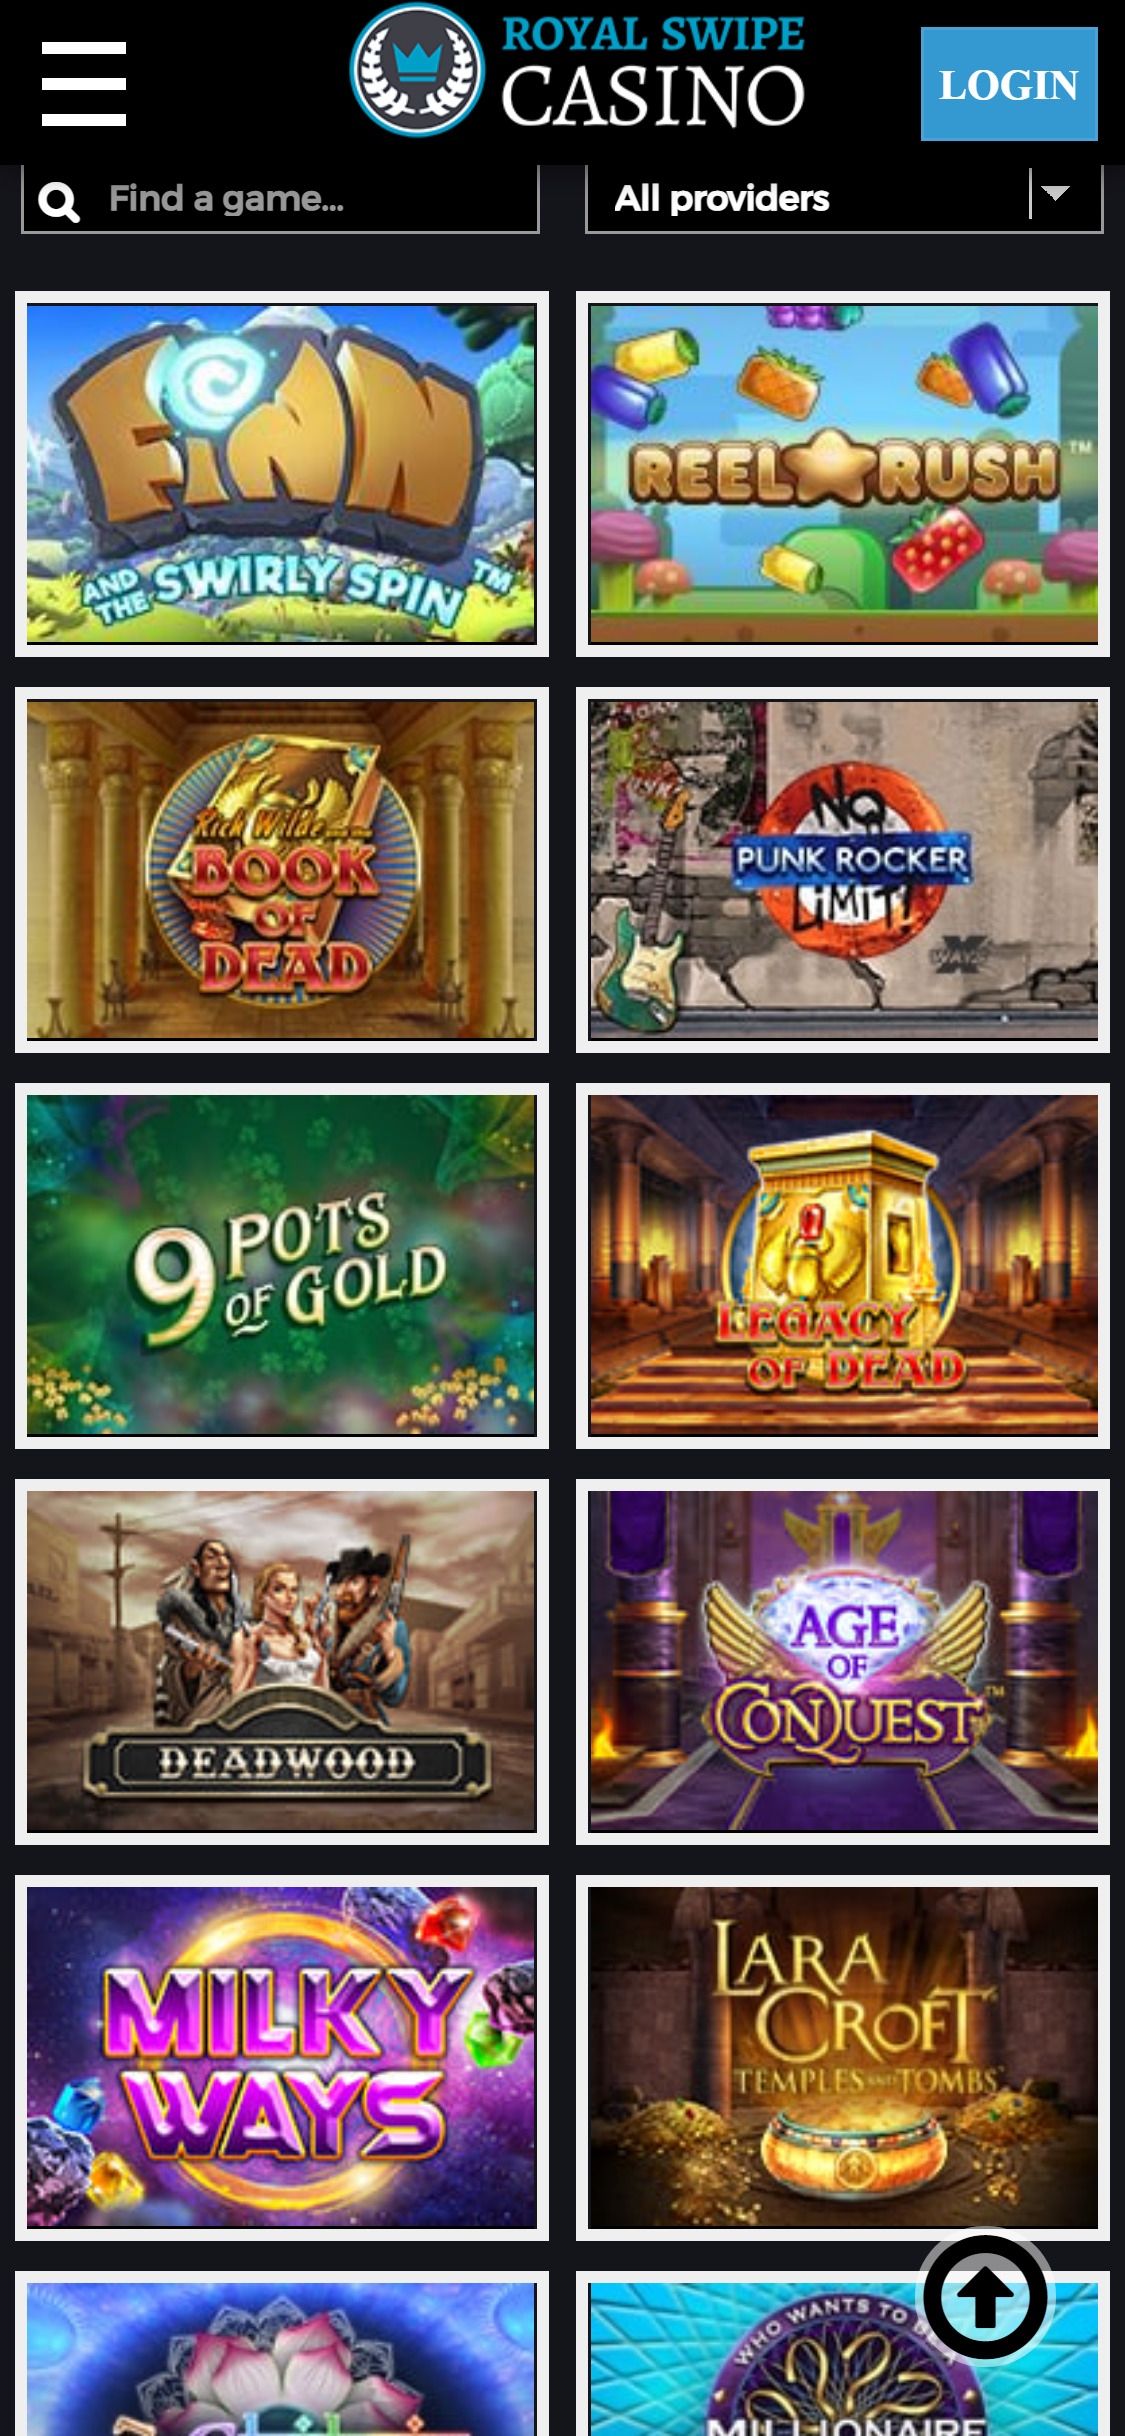 Royal Swipe Casino Mobile Games Review